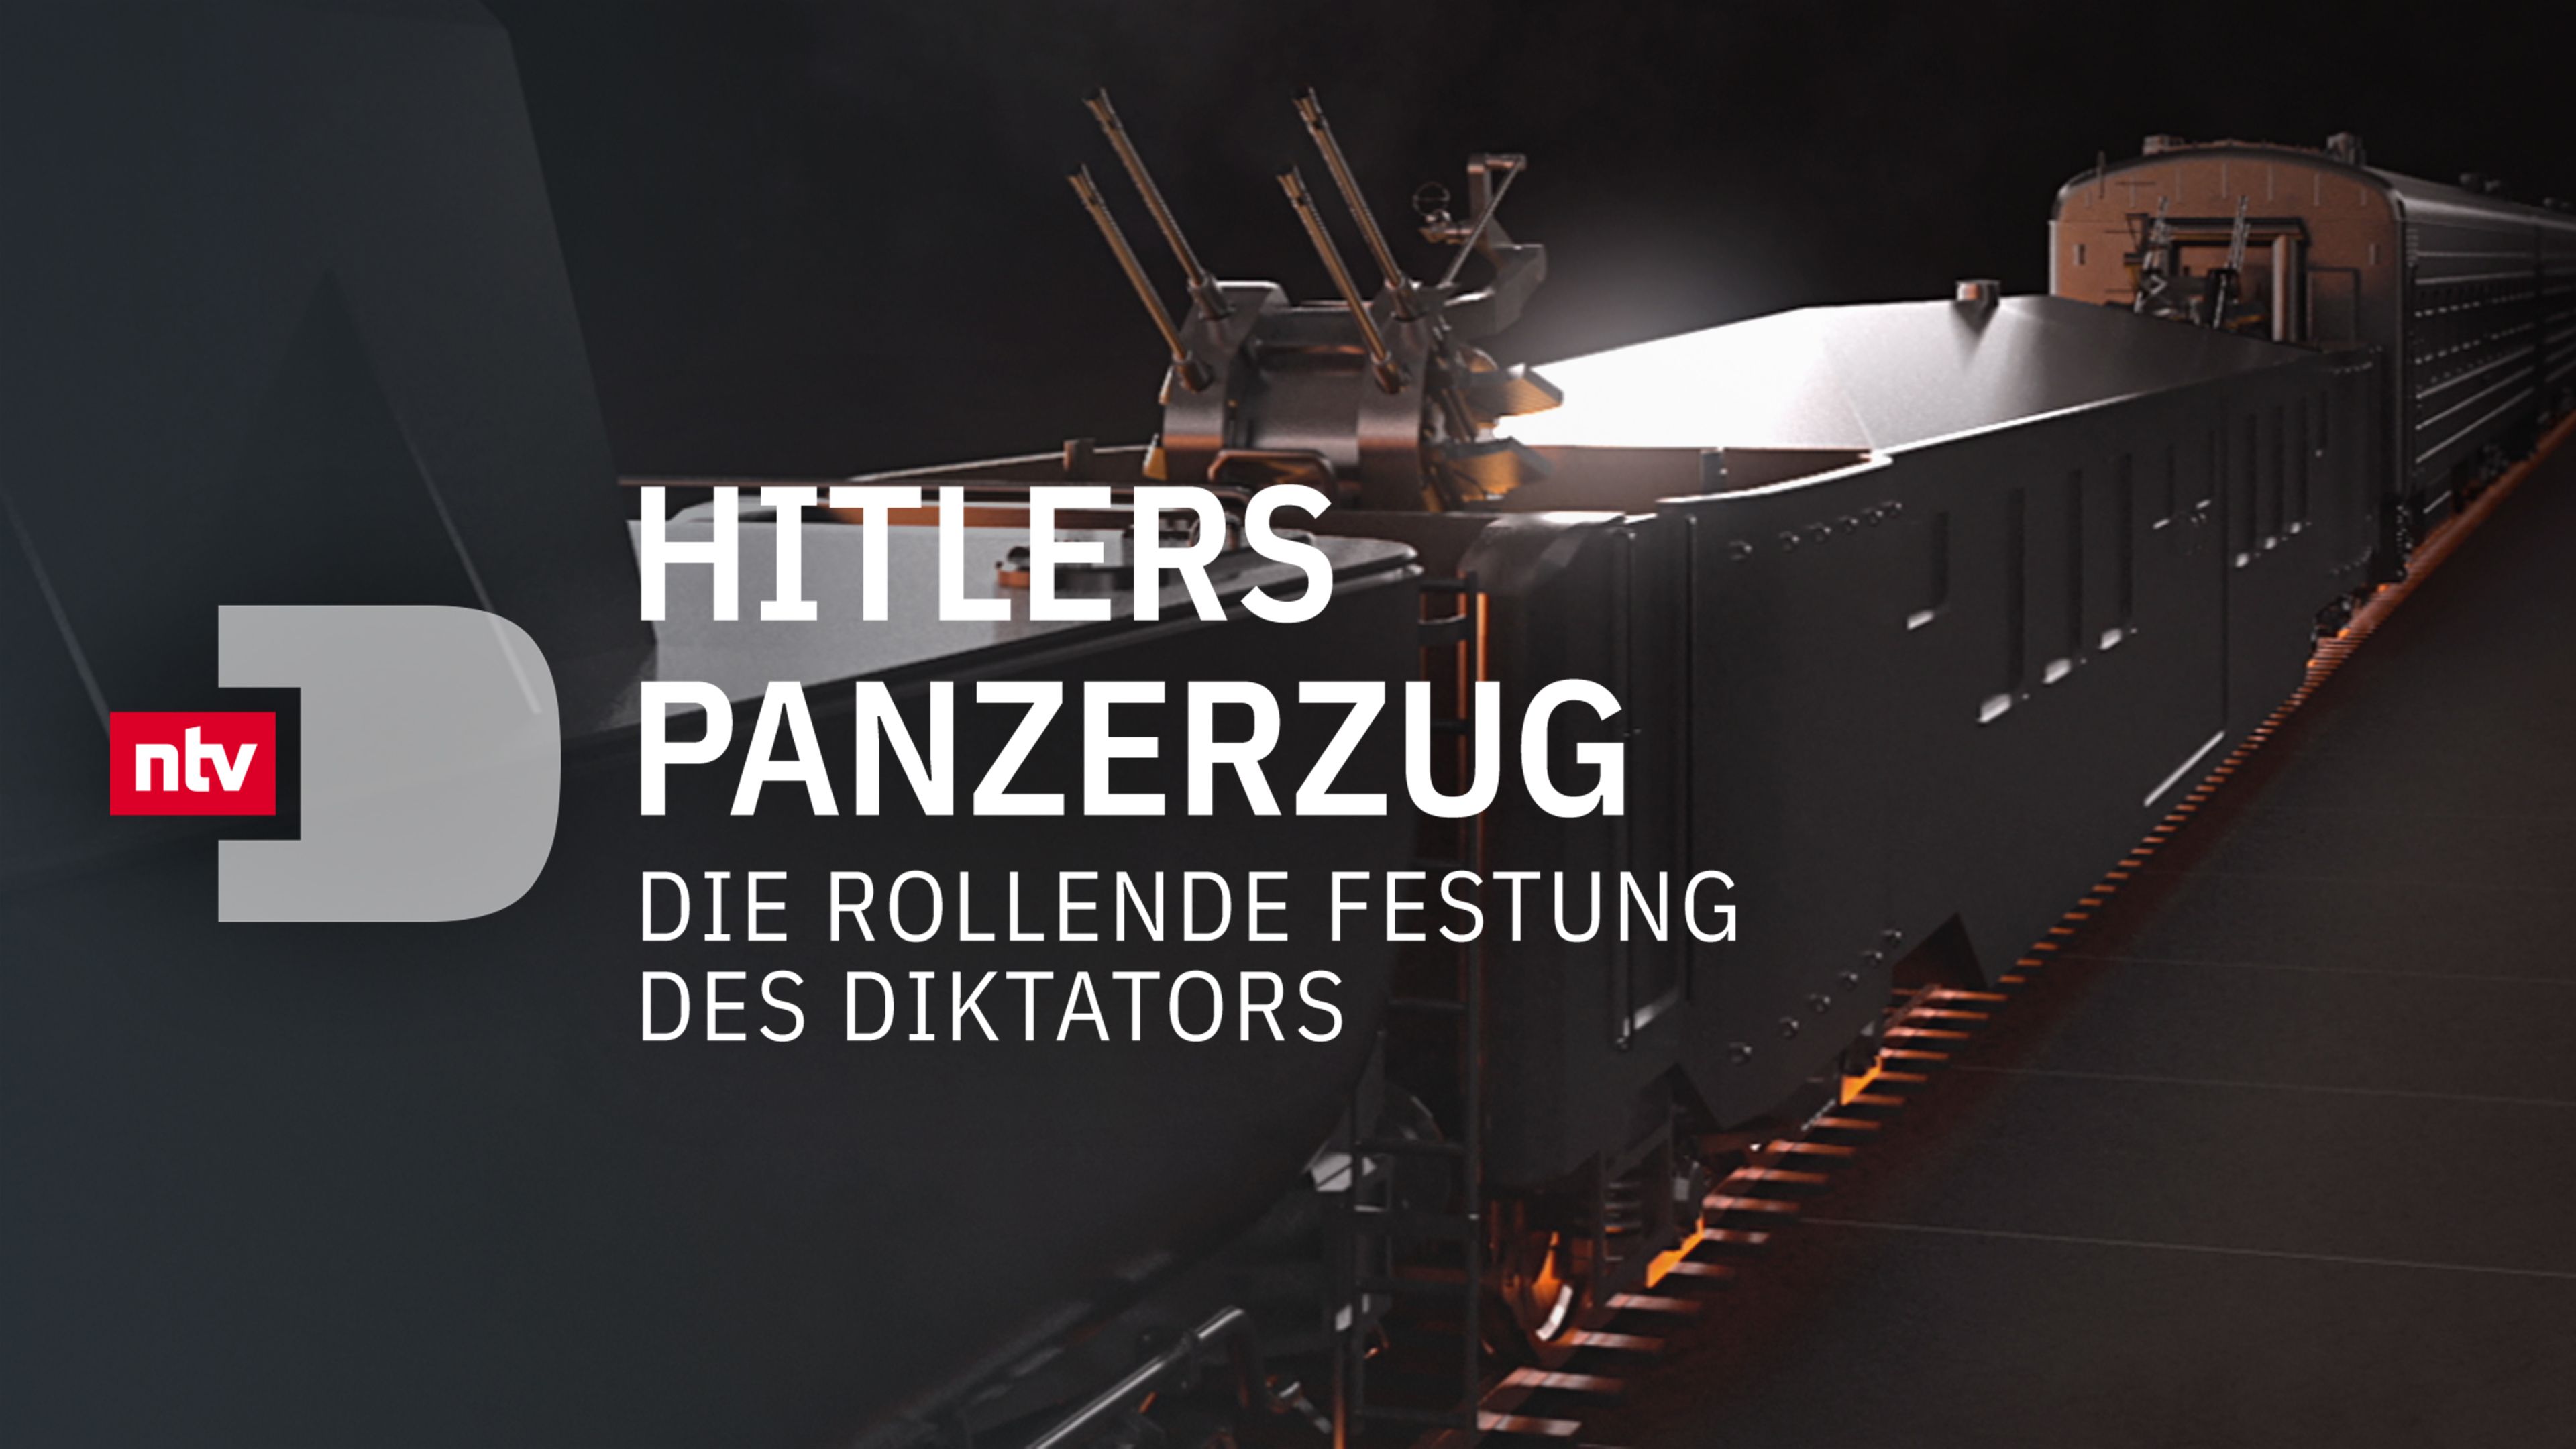 Hitlers Panzerzug - Die rollende Festung des Diktators